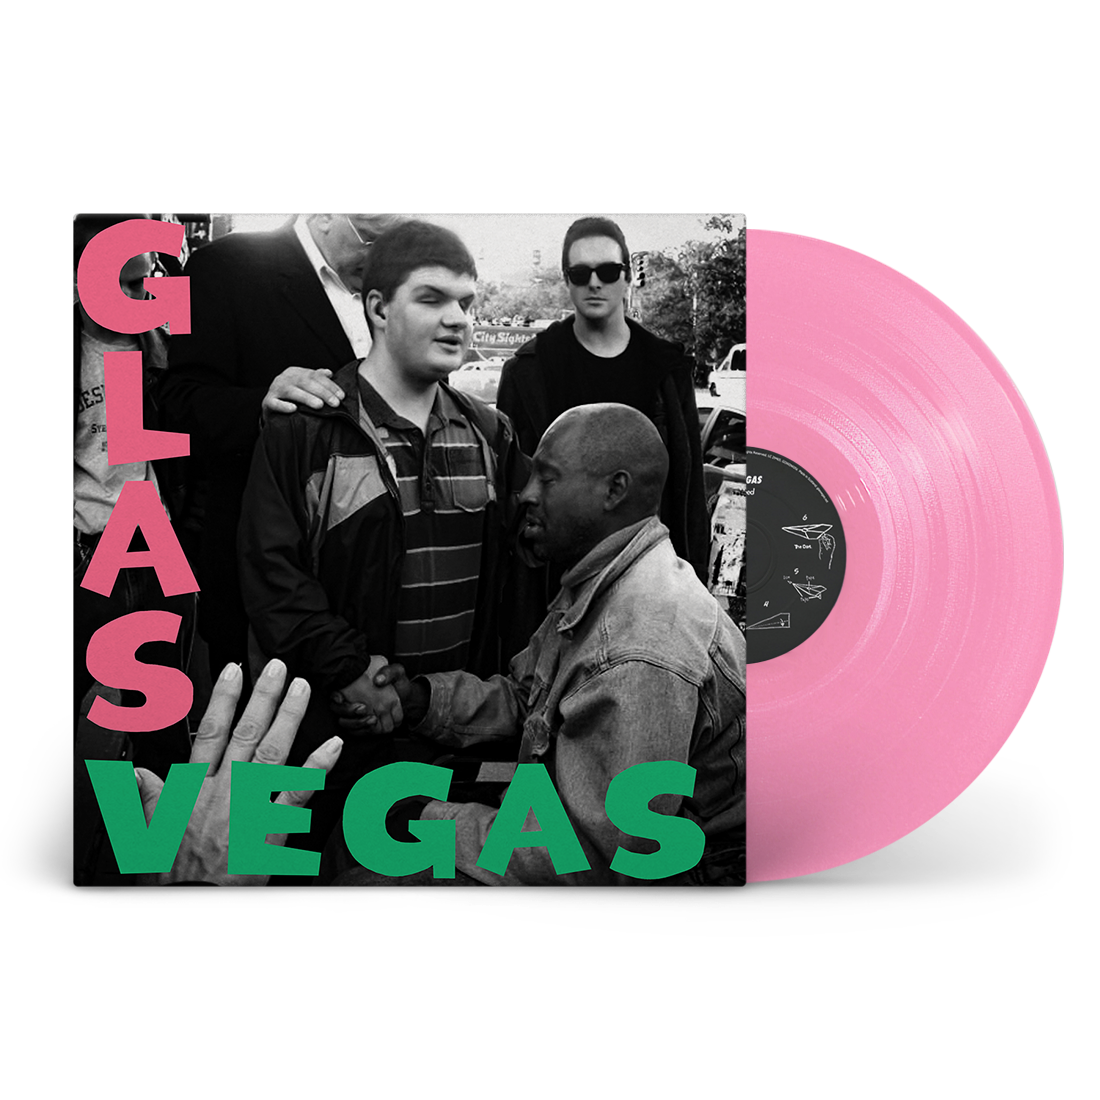 Glasvegas - Godspeed: Signed Exclusive Pink Vinyl LP